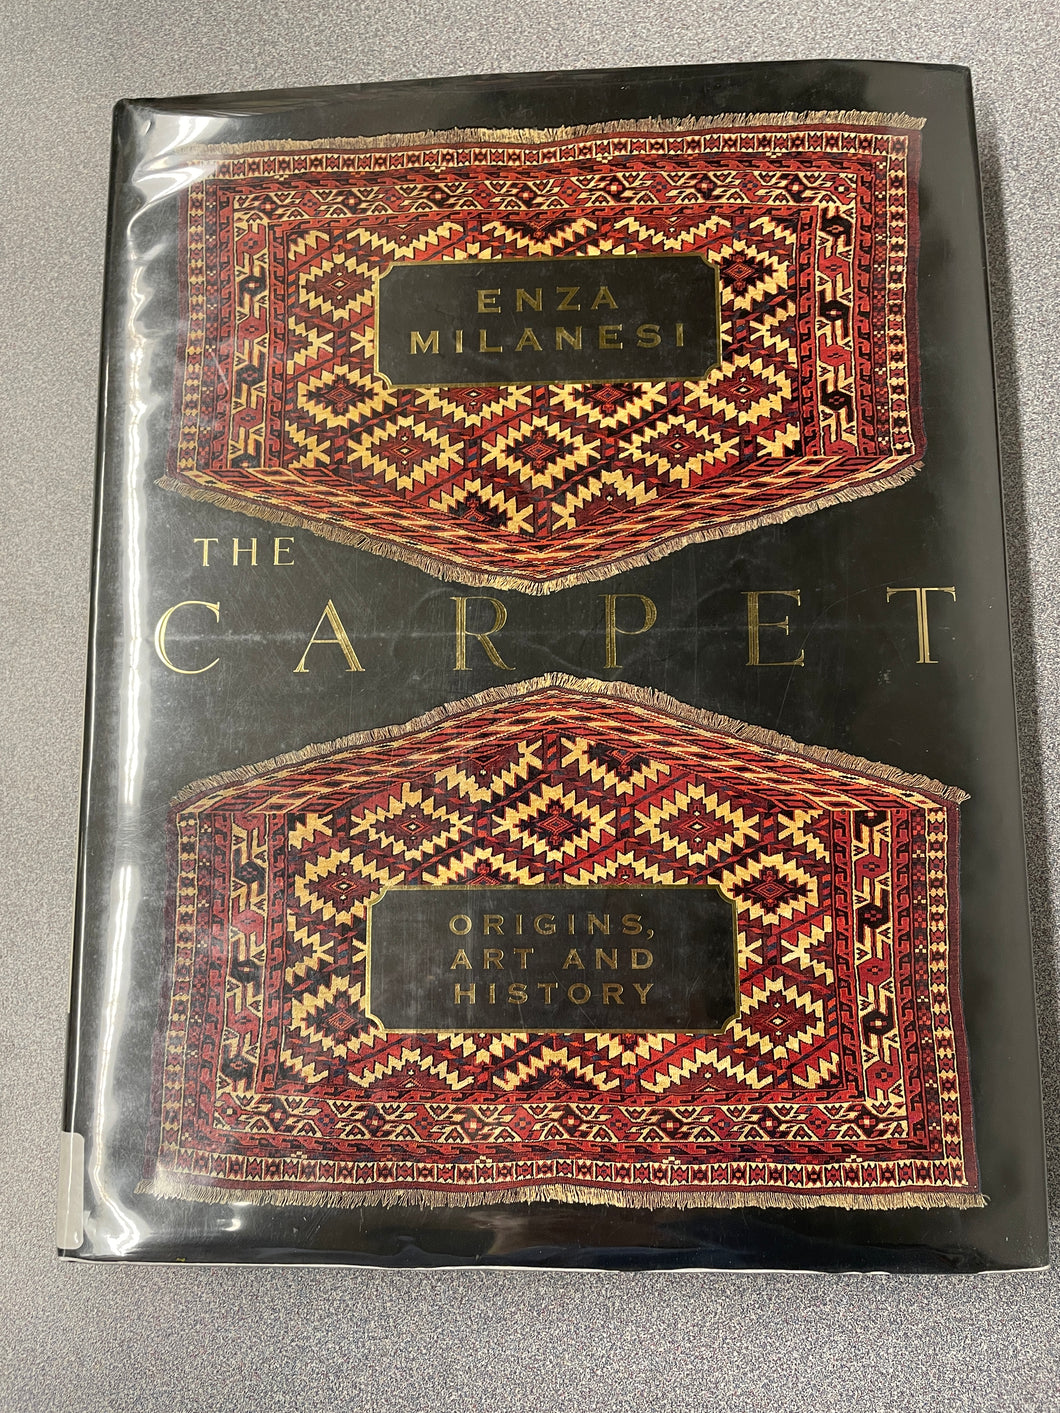 The Carpet: Origins, Art and History, Minalesi, Enza [1999] VA 11/23